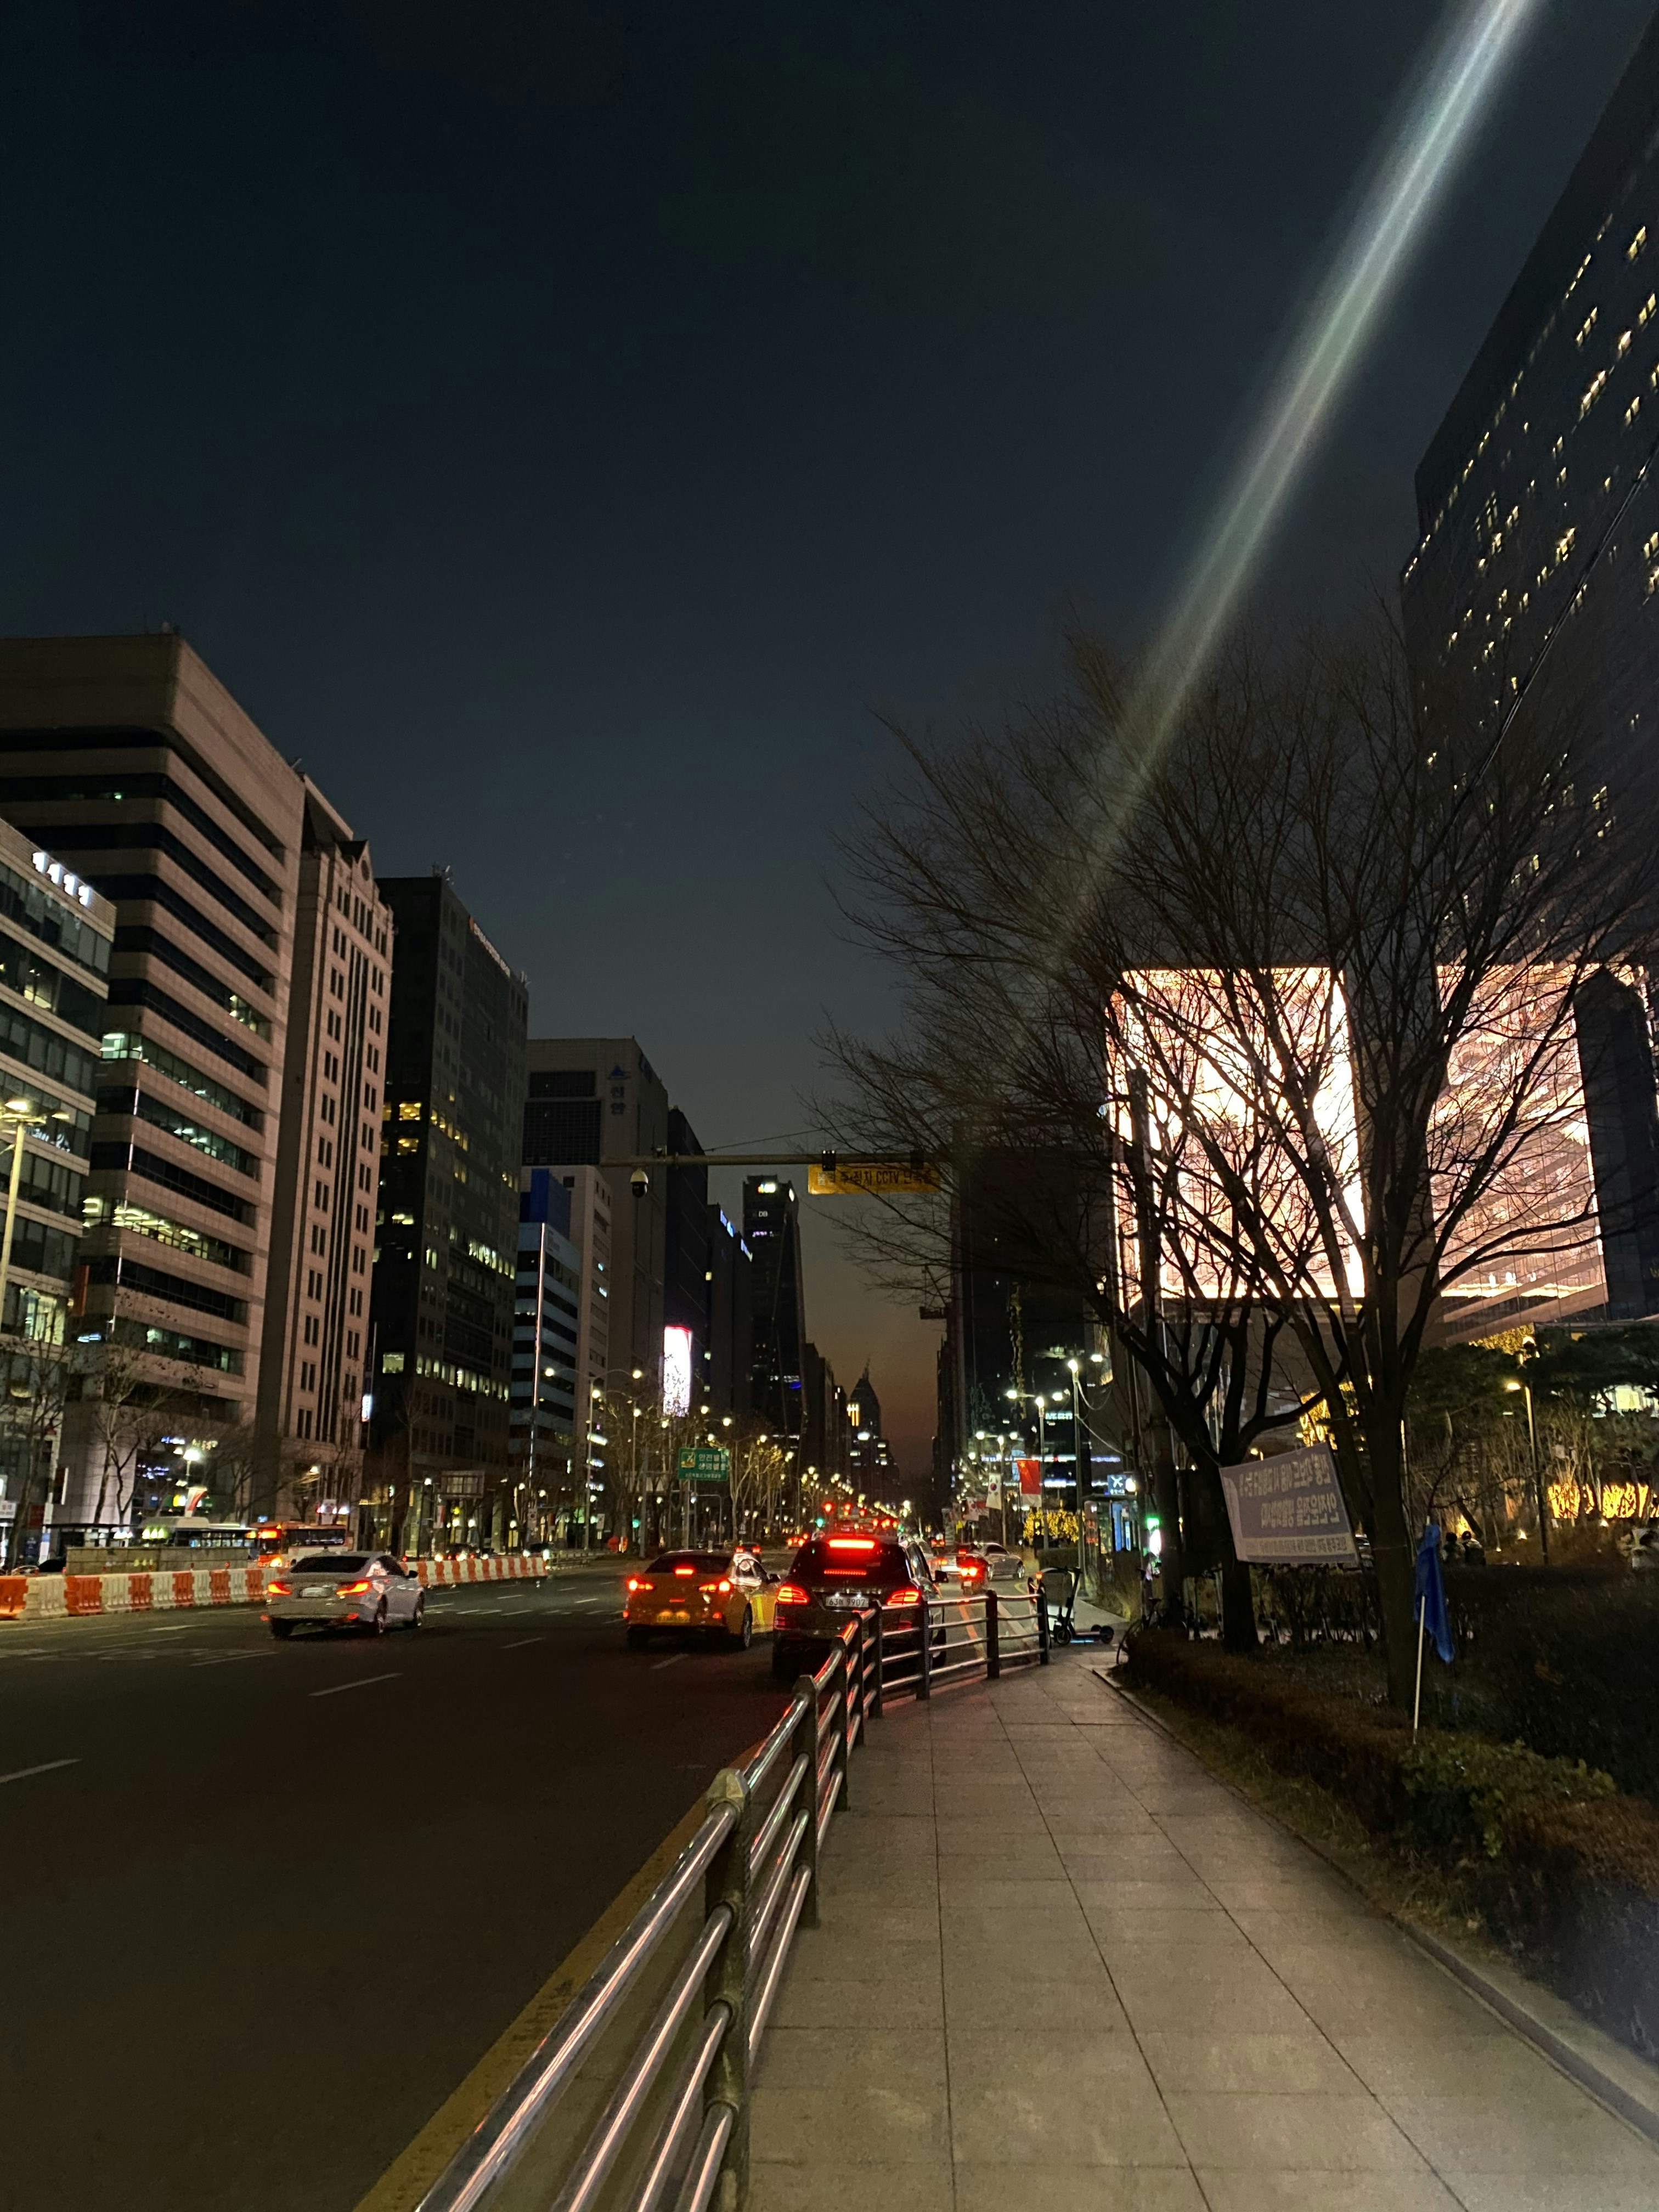 how do street lights work - modern LED technology illuminating city streets